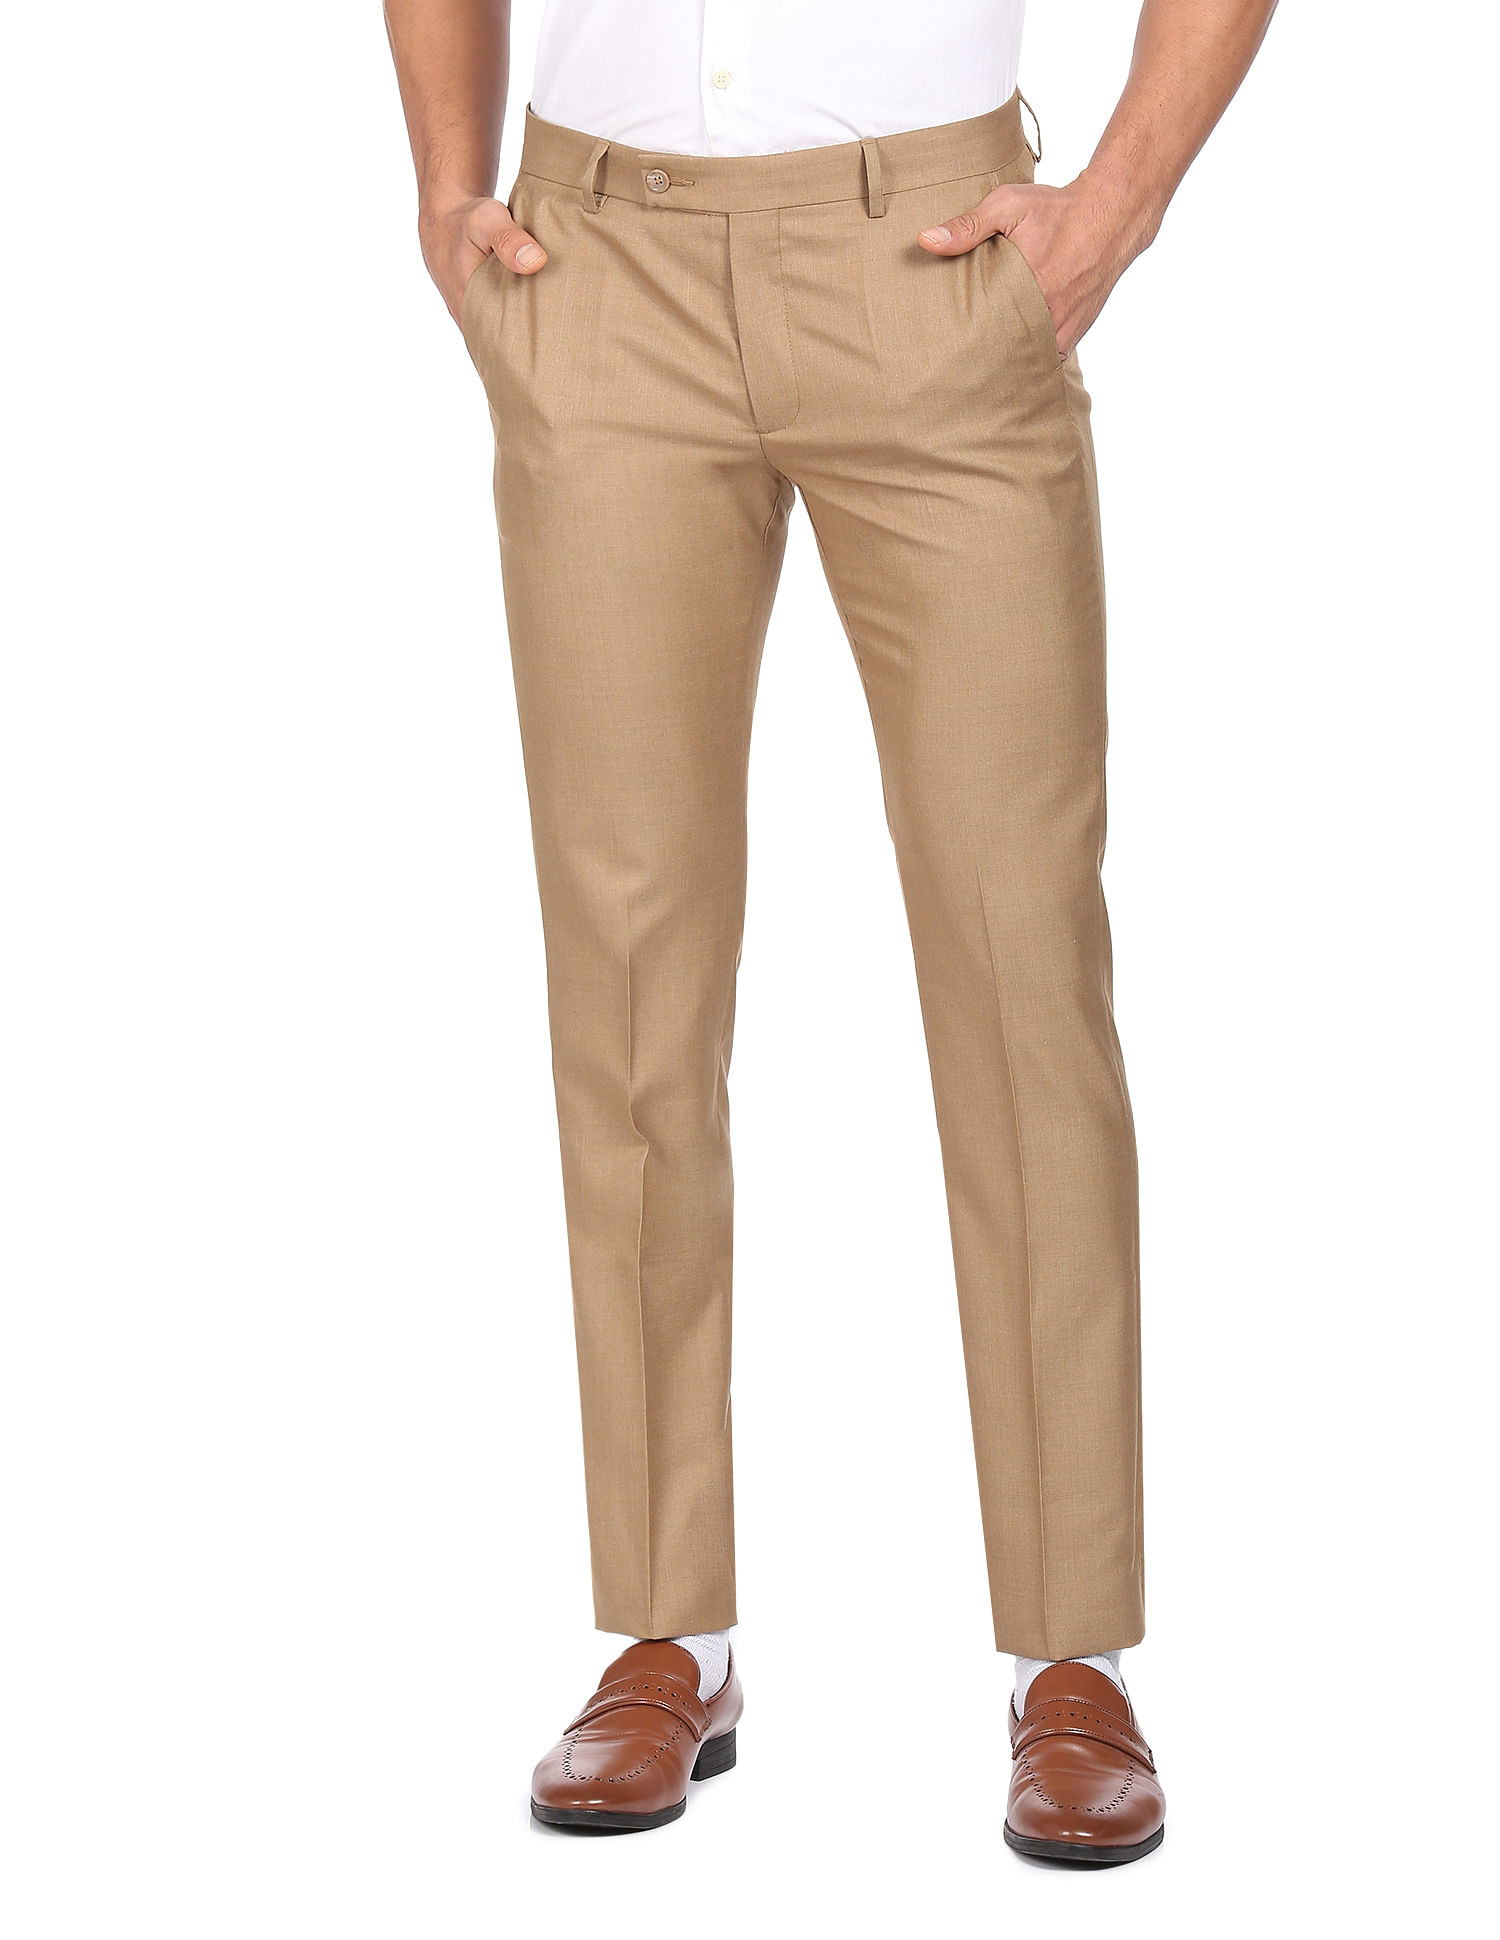 Buy Khaki Trousers & Pants for Men by CHENNIS Online | Ajio.com